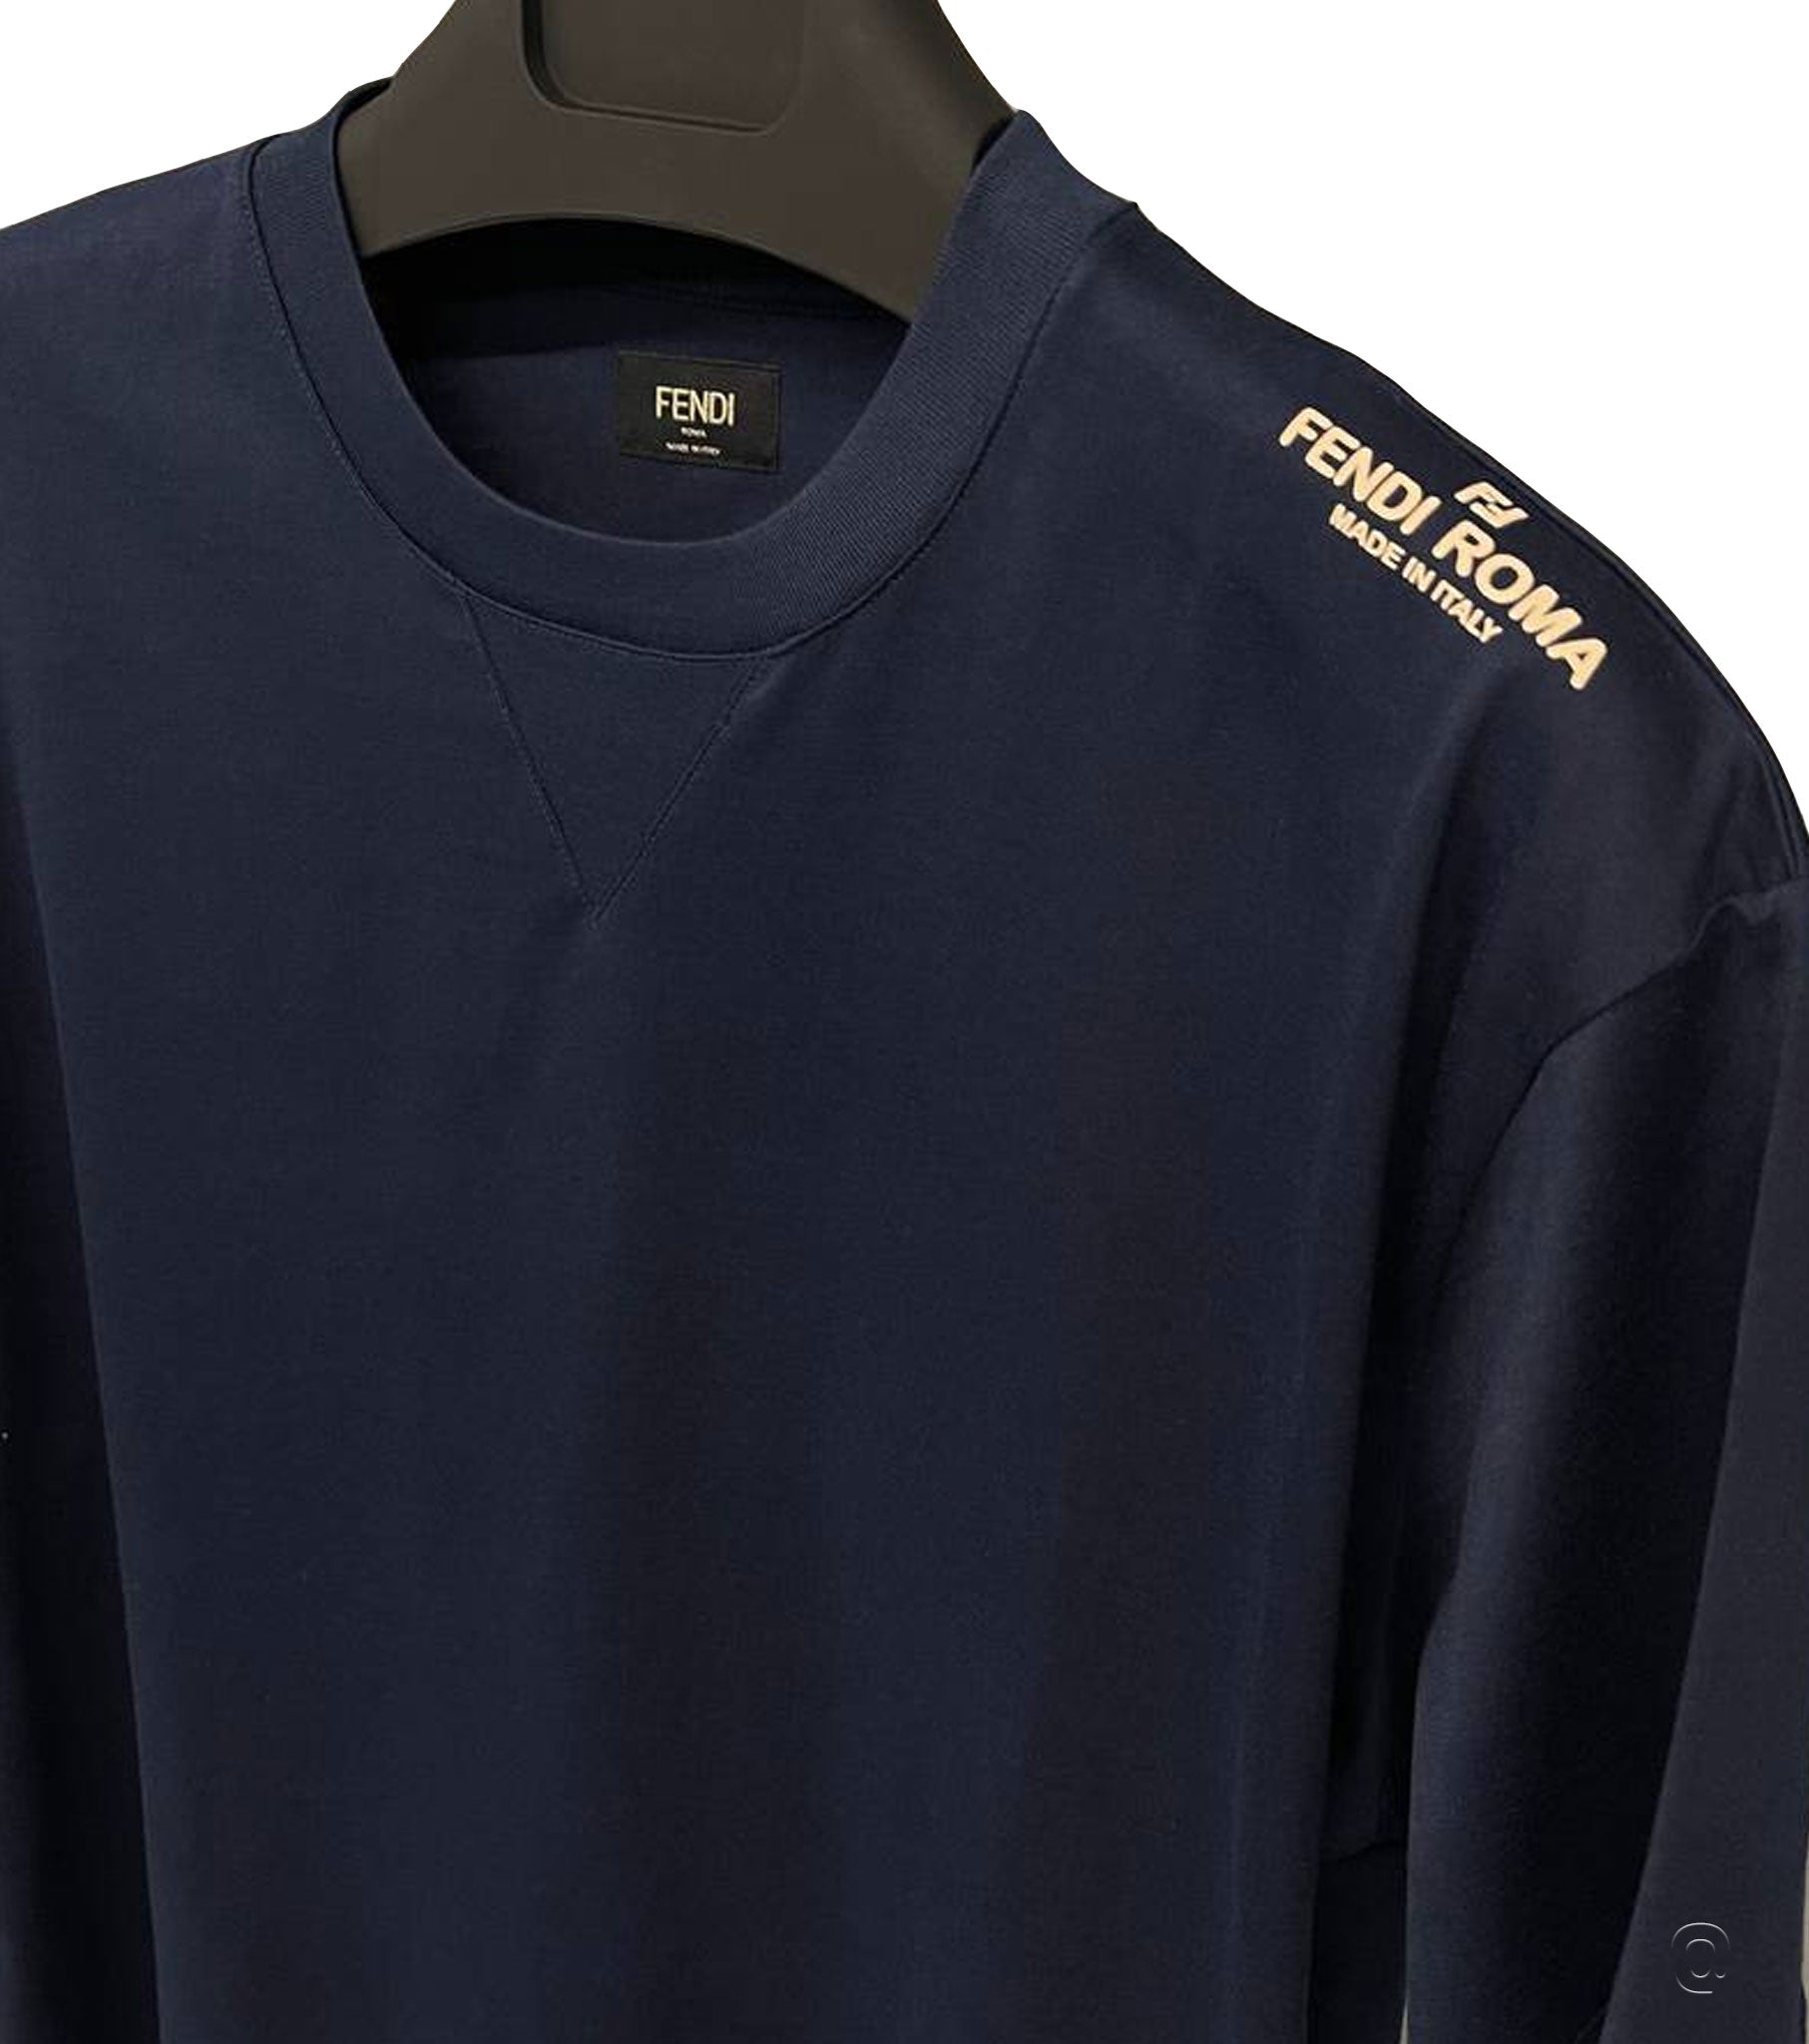 Navy Cotton T-shirt